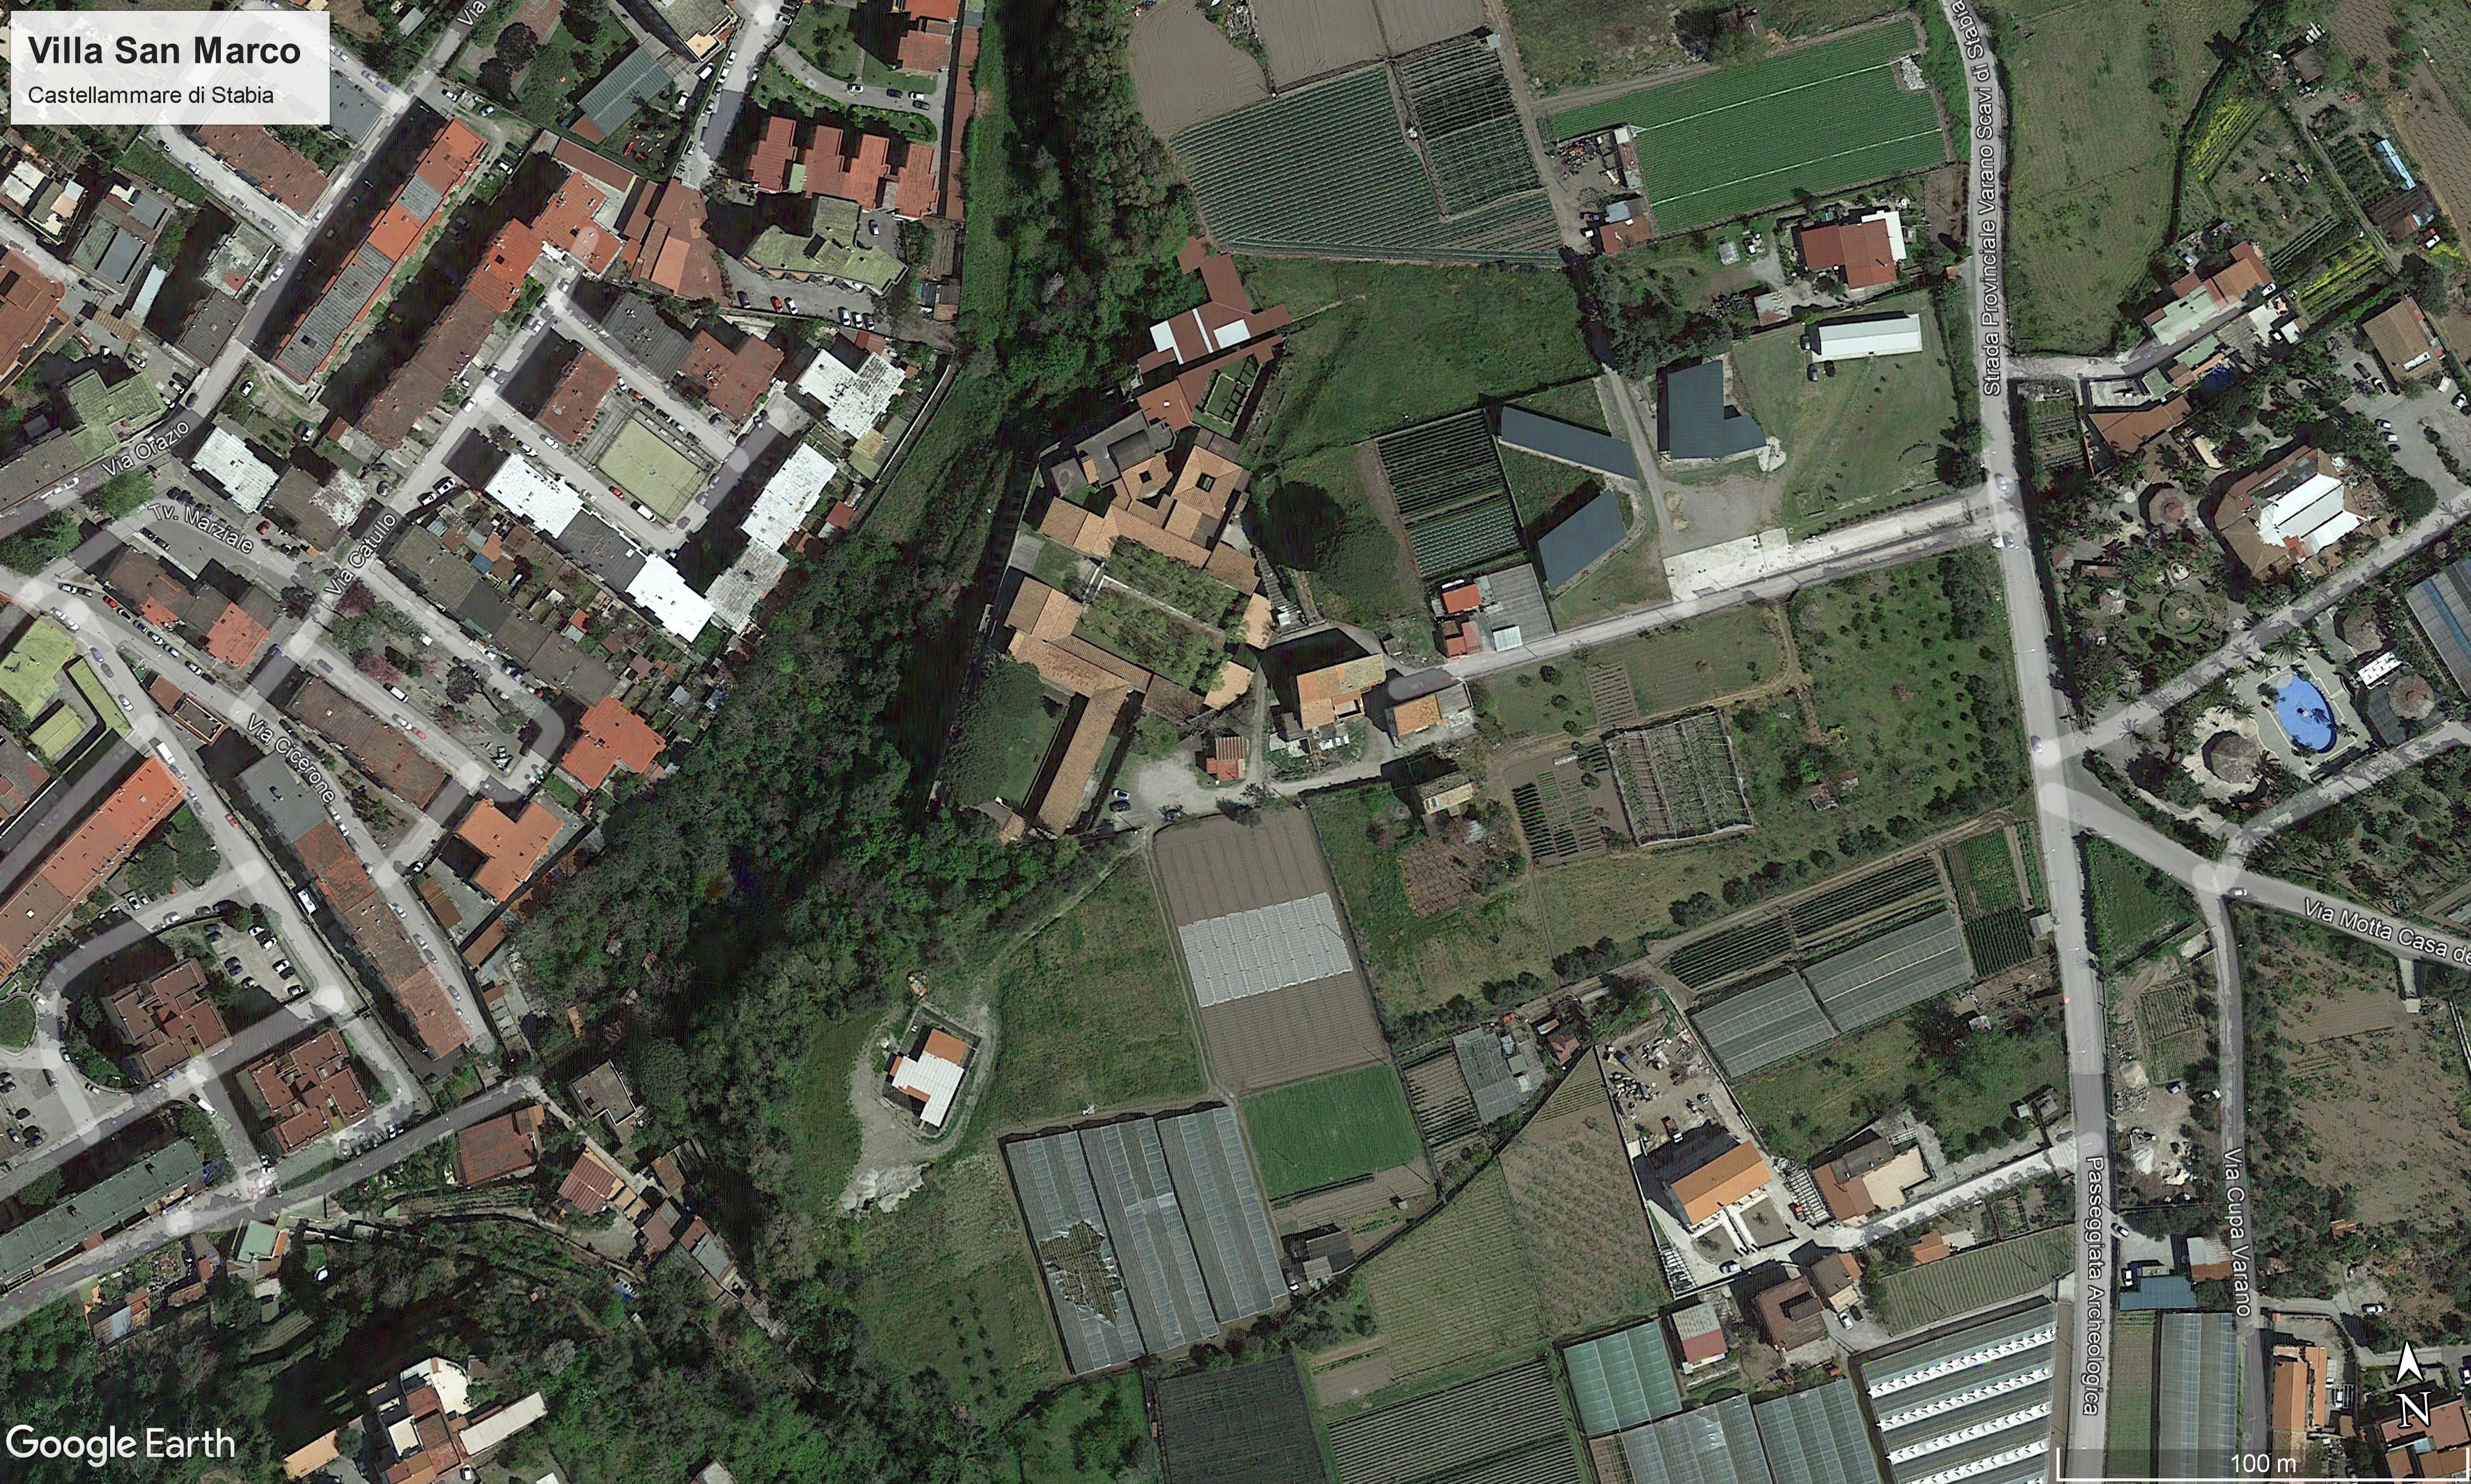  Figure 1. Castellammare di Stabia, Villa San Marco. Aerial view of the ancient complexes (from Google Earth) 